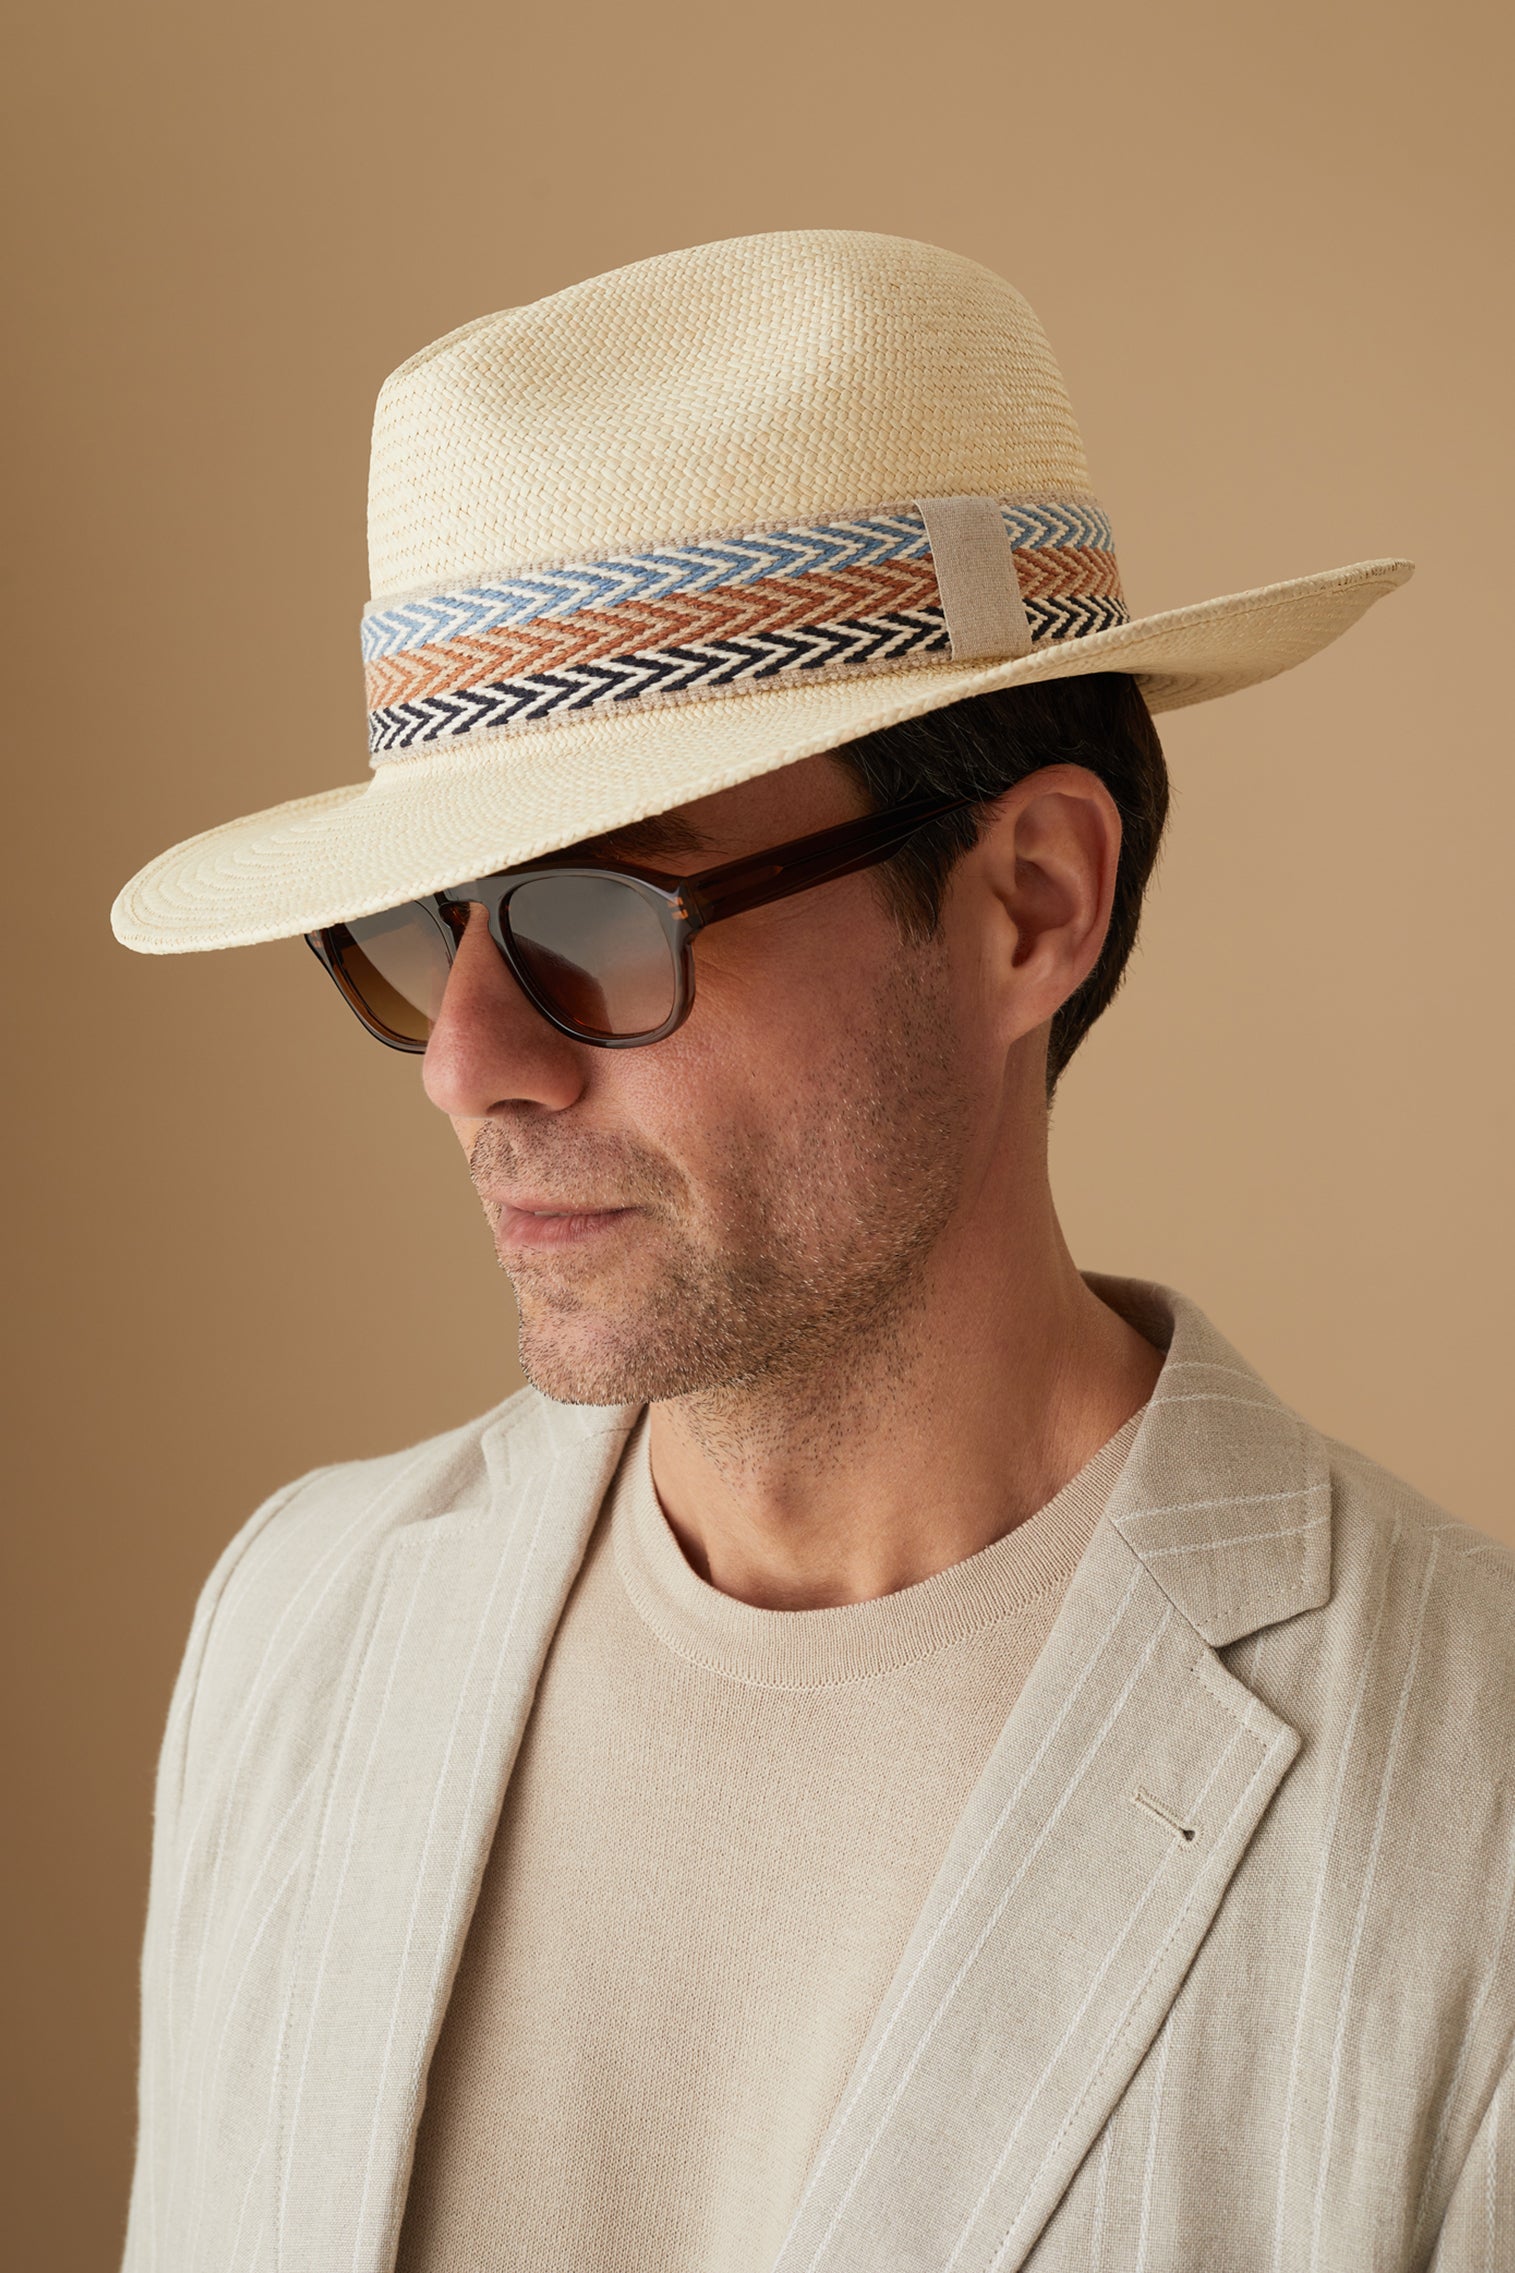 Walter Panama - Panama Hats - Lock & Co. Hatters London UK